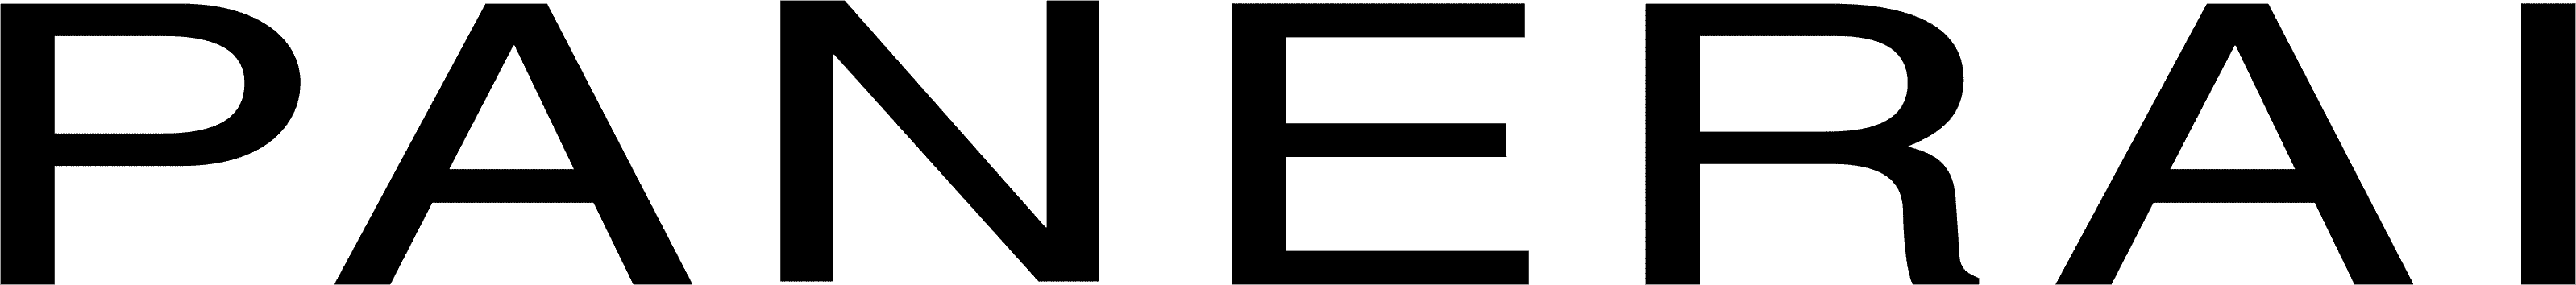 Panerai logo